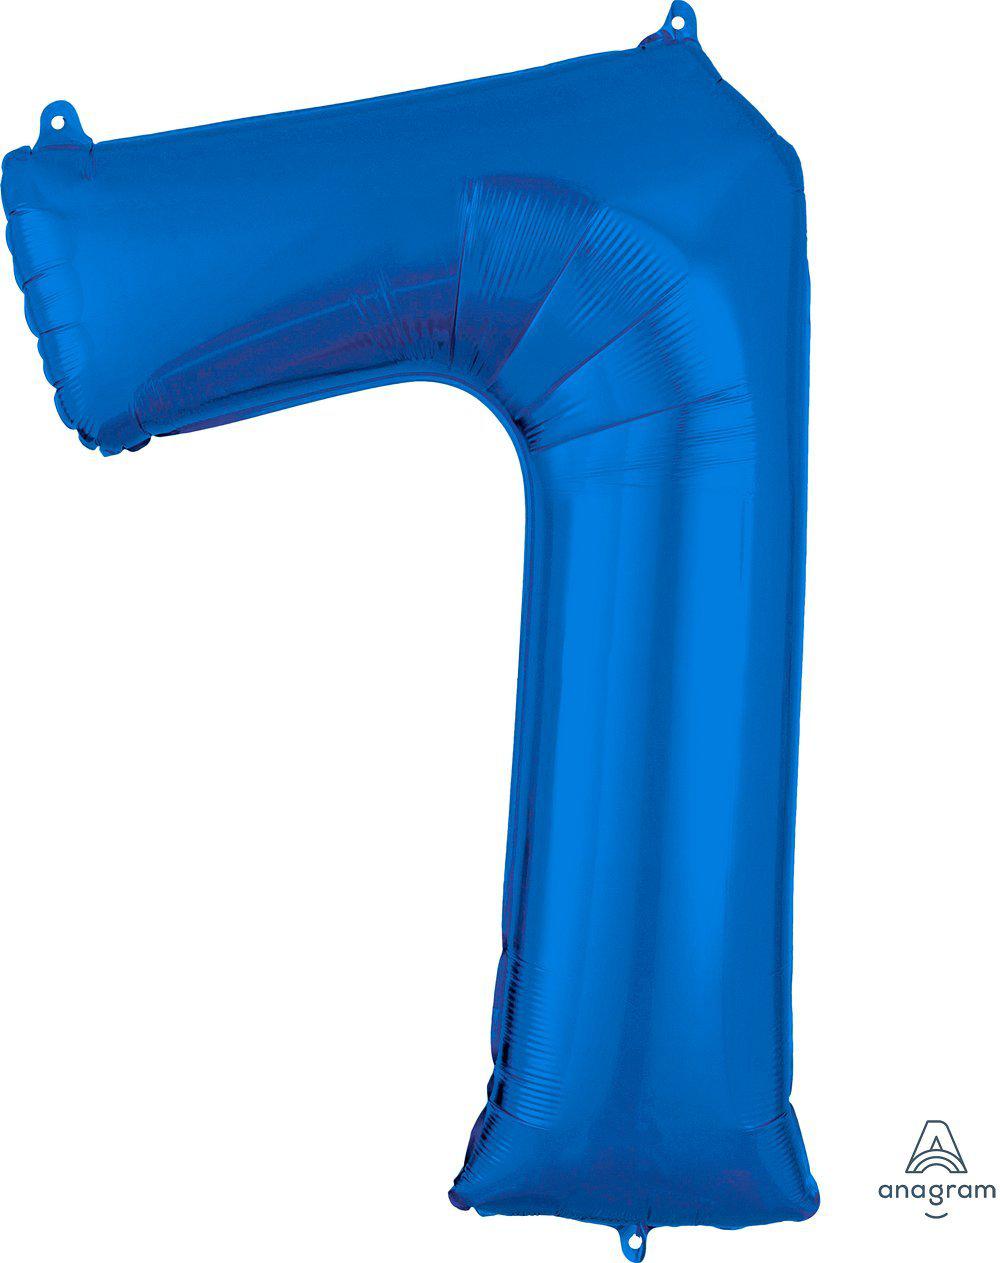 Blue Foil Number Balloon 66cm Anagram